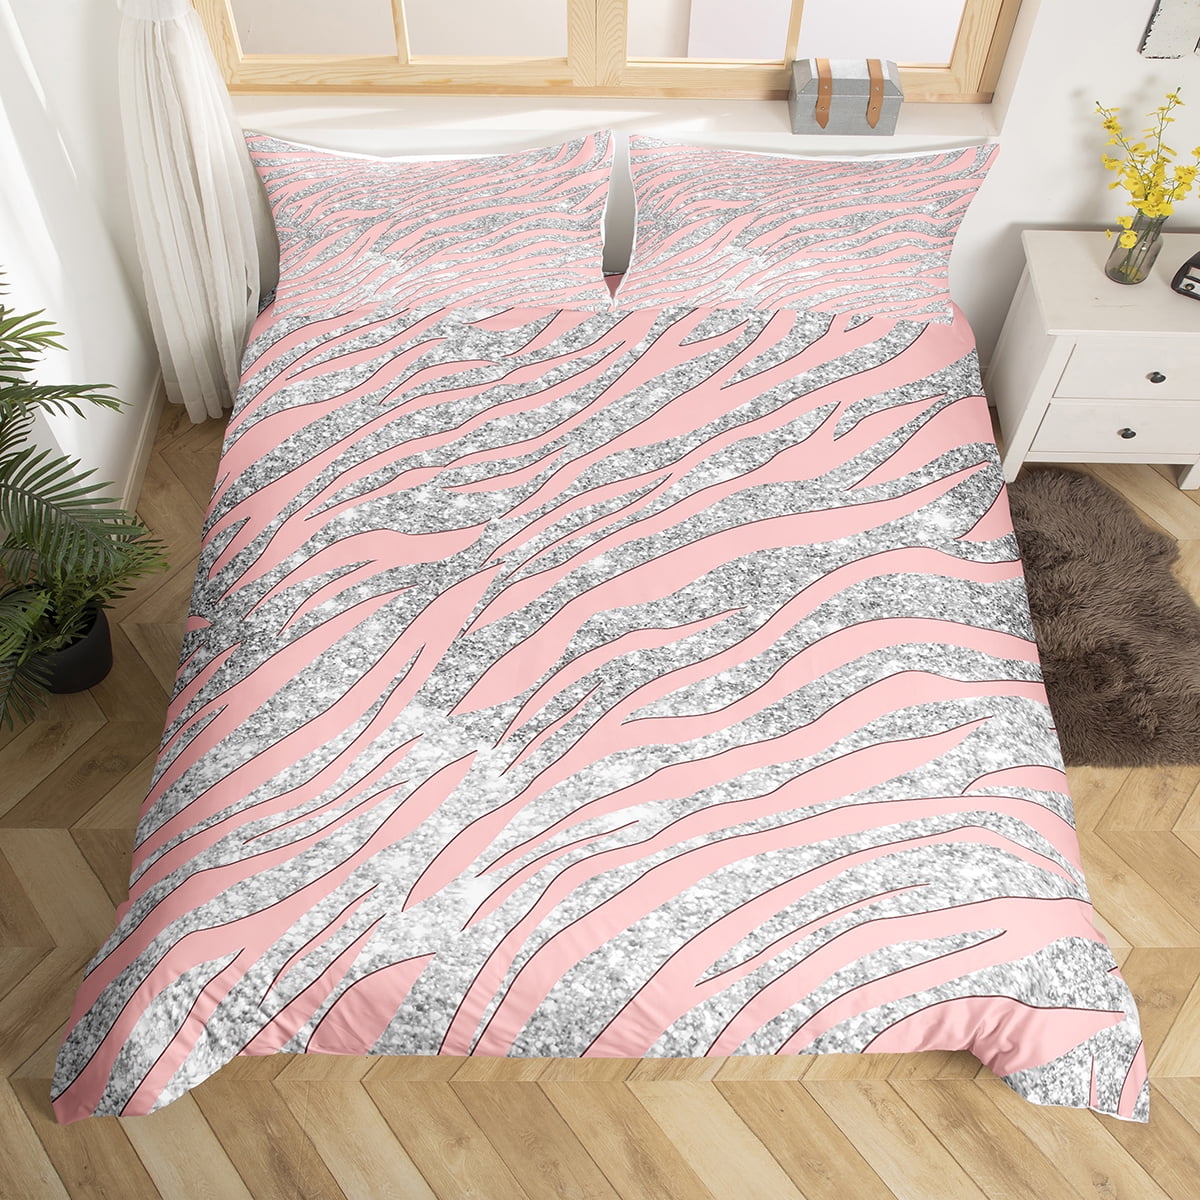 YST Cute Zebra Print Bedding Queen for Girls Pink Animal Print Duvet Cover  Queen, Psychedelic Sequins Comforter Cover Silver Gradient Glitters Bed Set,  Kids Aesthetic Bed Set (No Comforter) 